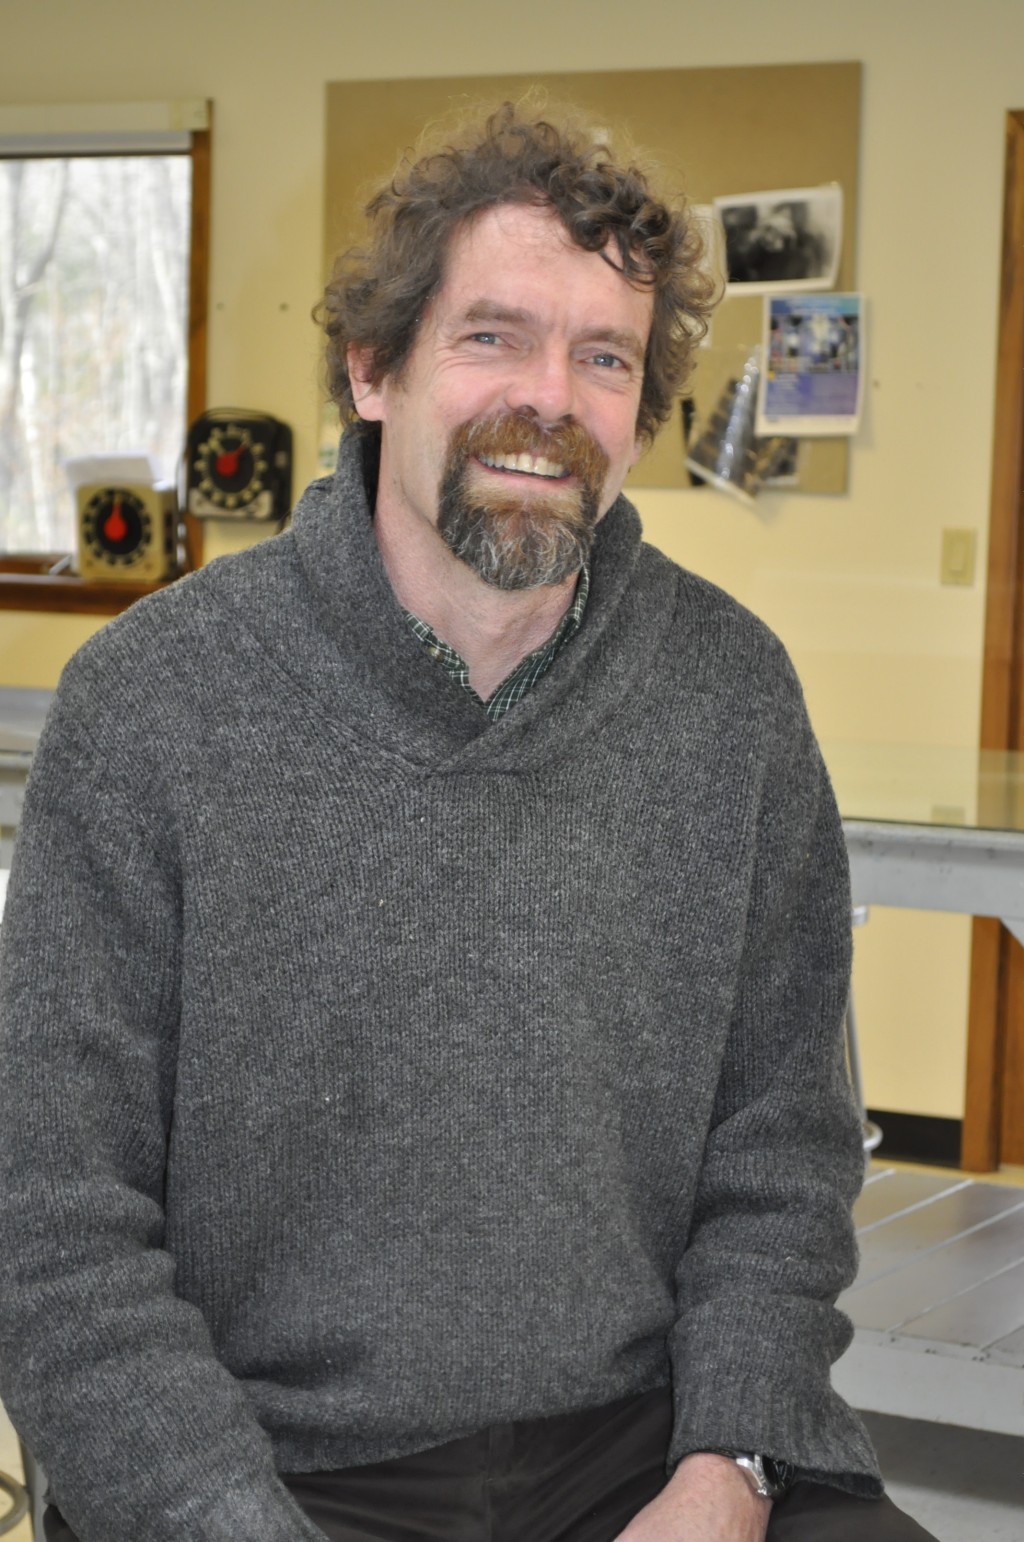 Stephen Burt, chair and associate professor in the Department of Arts